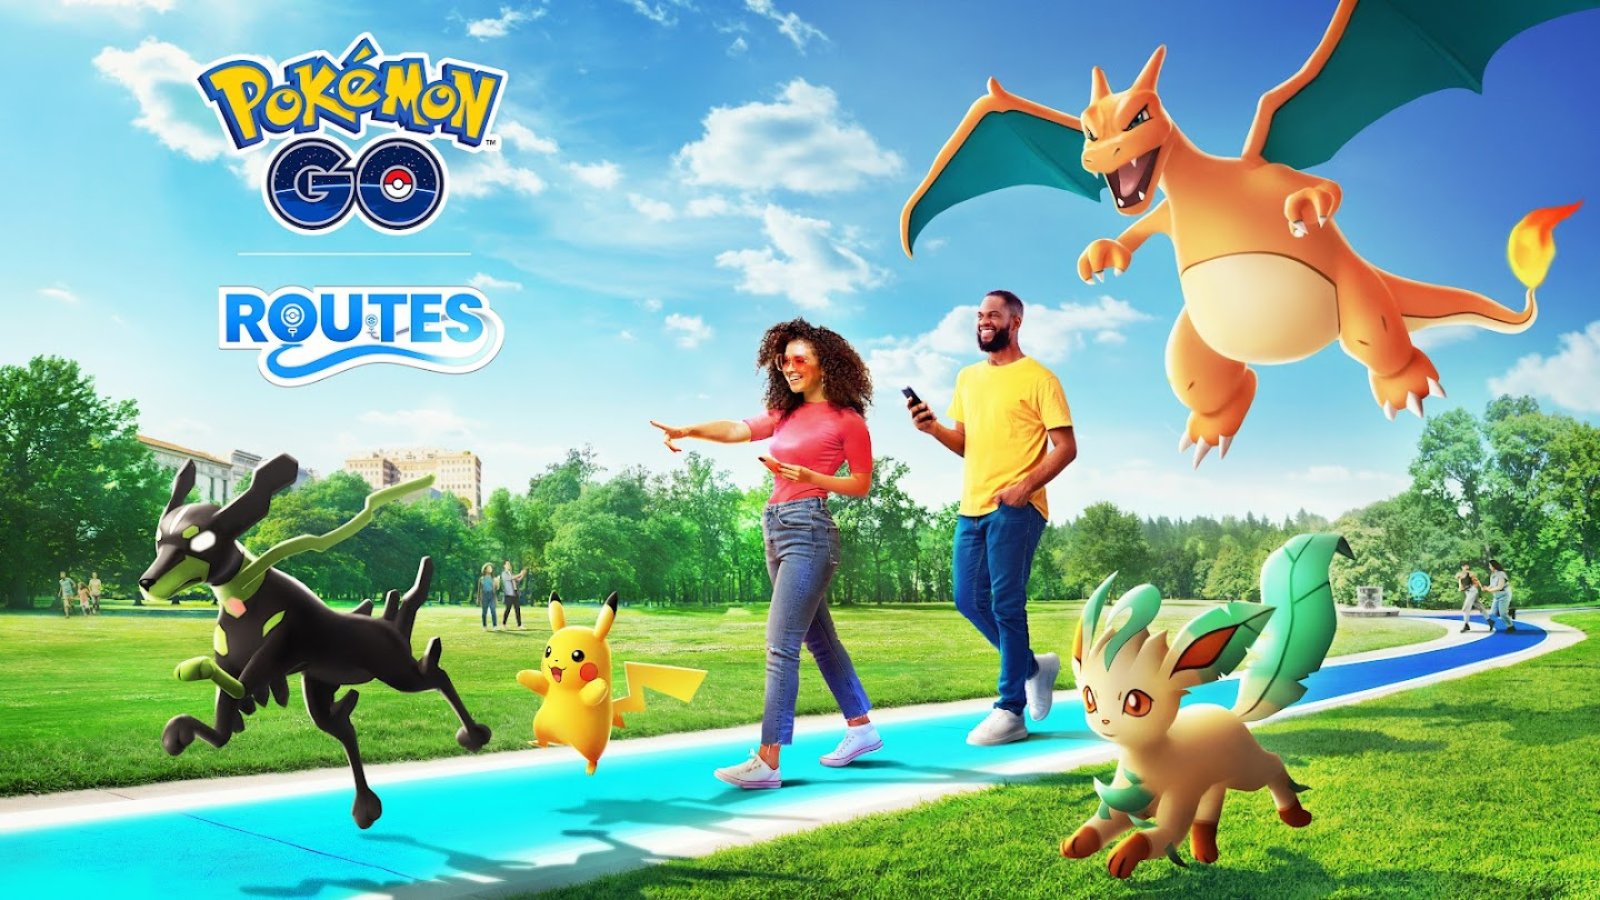 Pokémon Go players walking on a path alongside Zygarde, Pikachu, Leafeon, and Charizard.